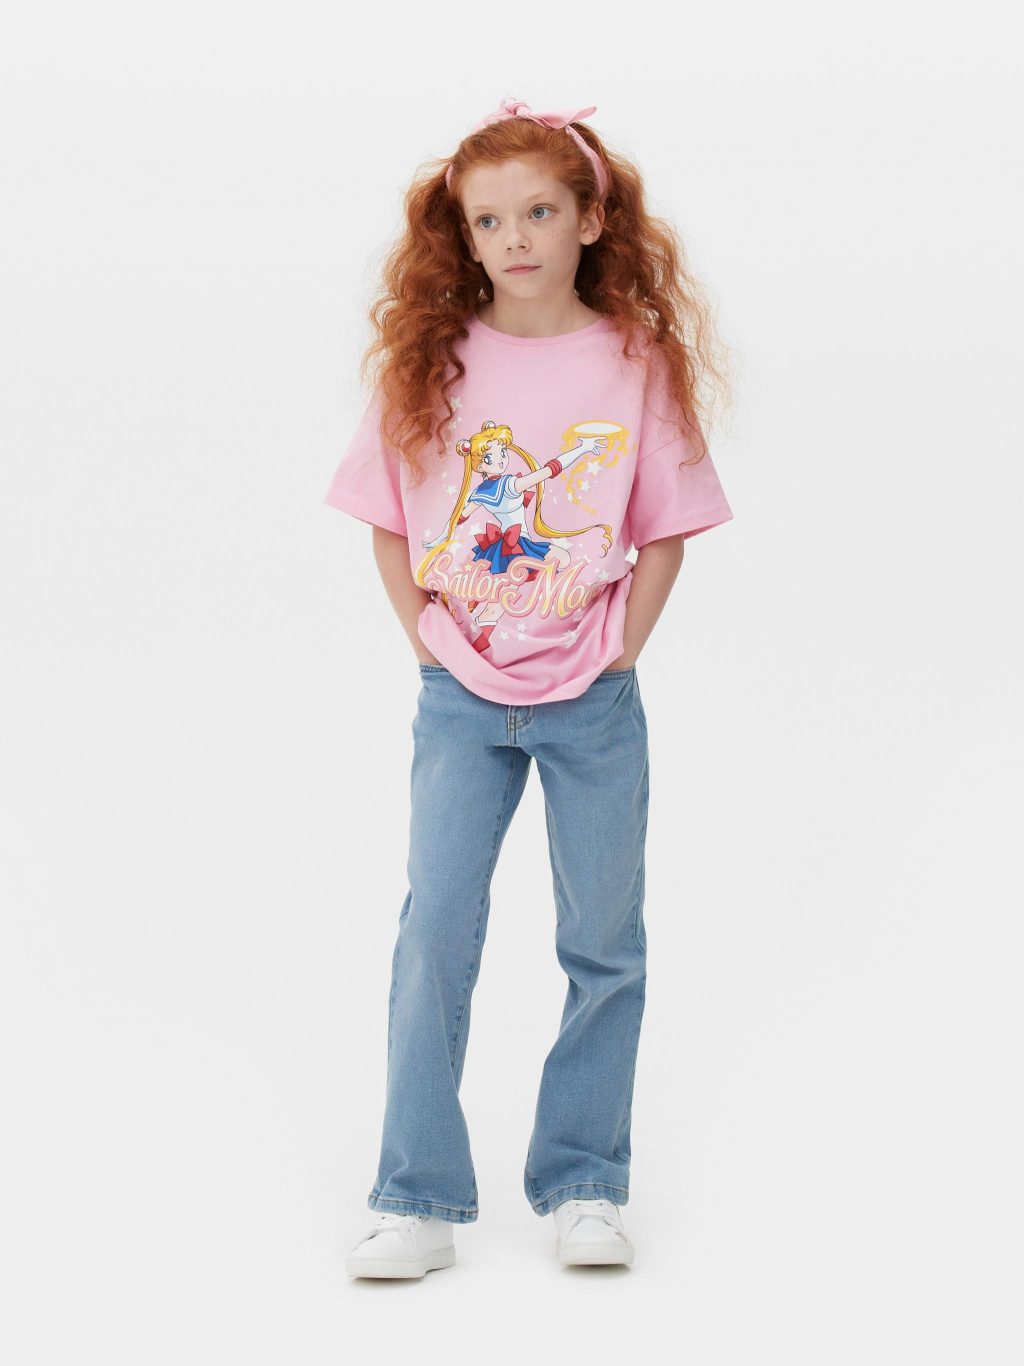 Primark UK: Child's Sailor Moon Printed Cotton T-Shirt